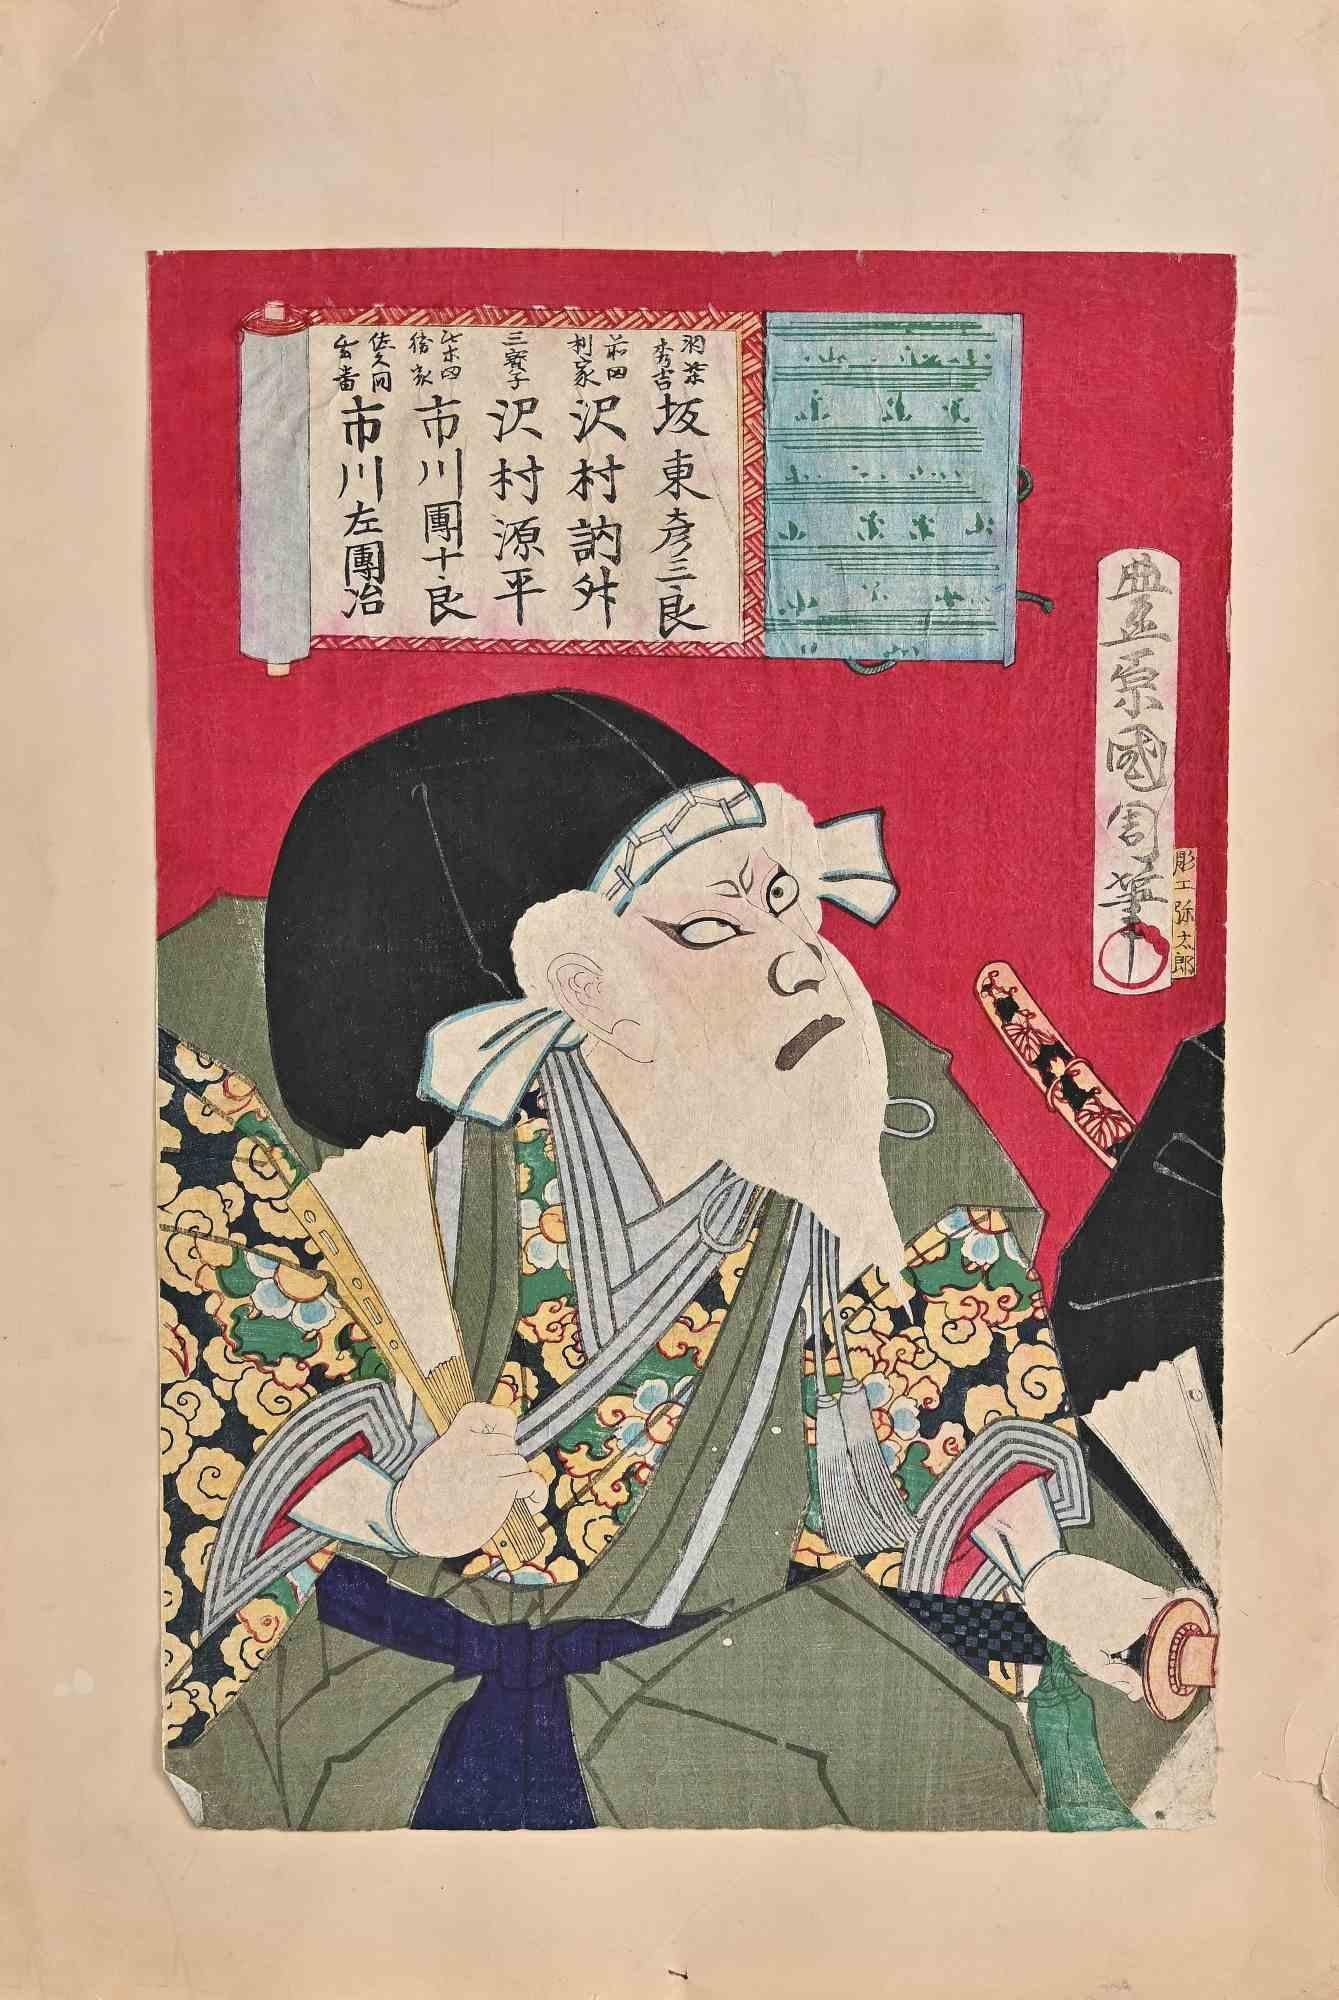 Utagawa Kunisada (Toyokuni III) Portrait Print - Old Samurai - Woodcut Print after Utagawa Kunisada - Late 19th Century